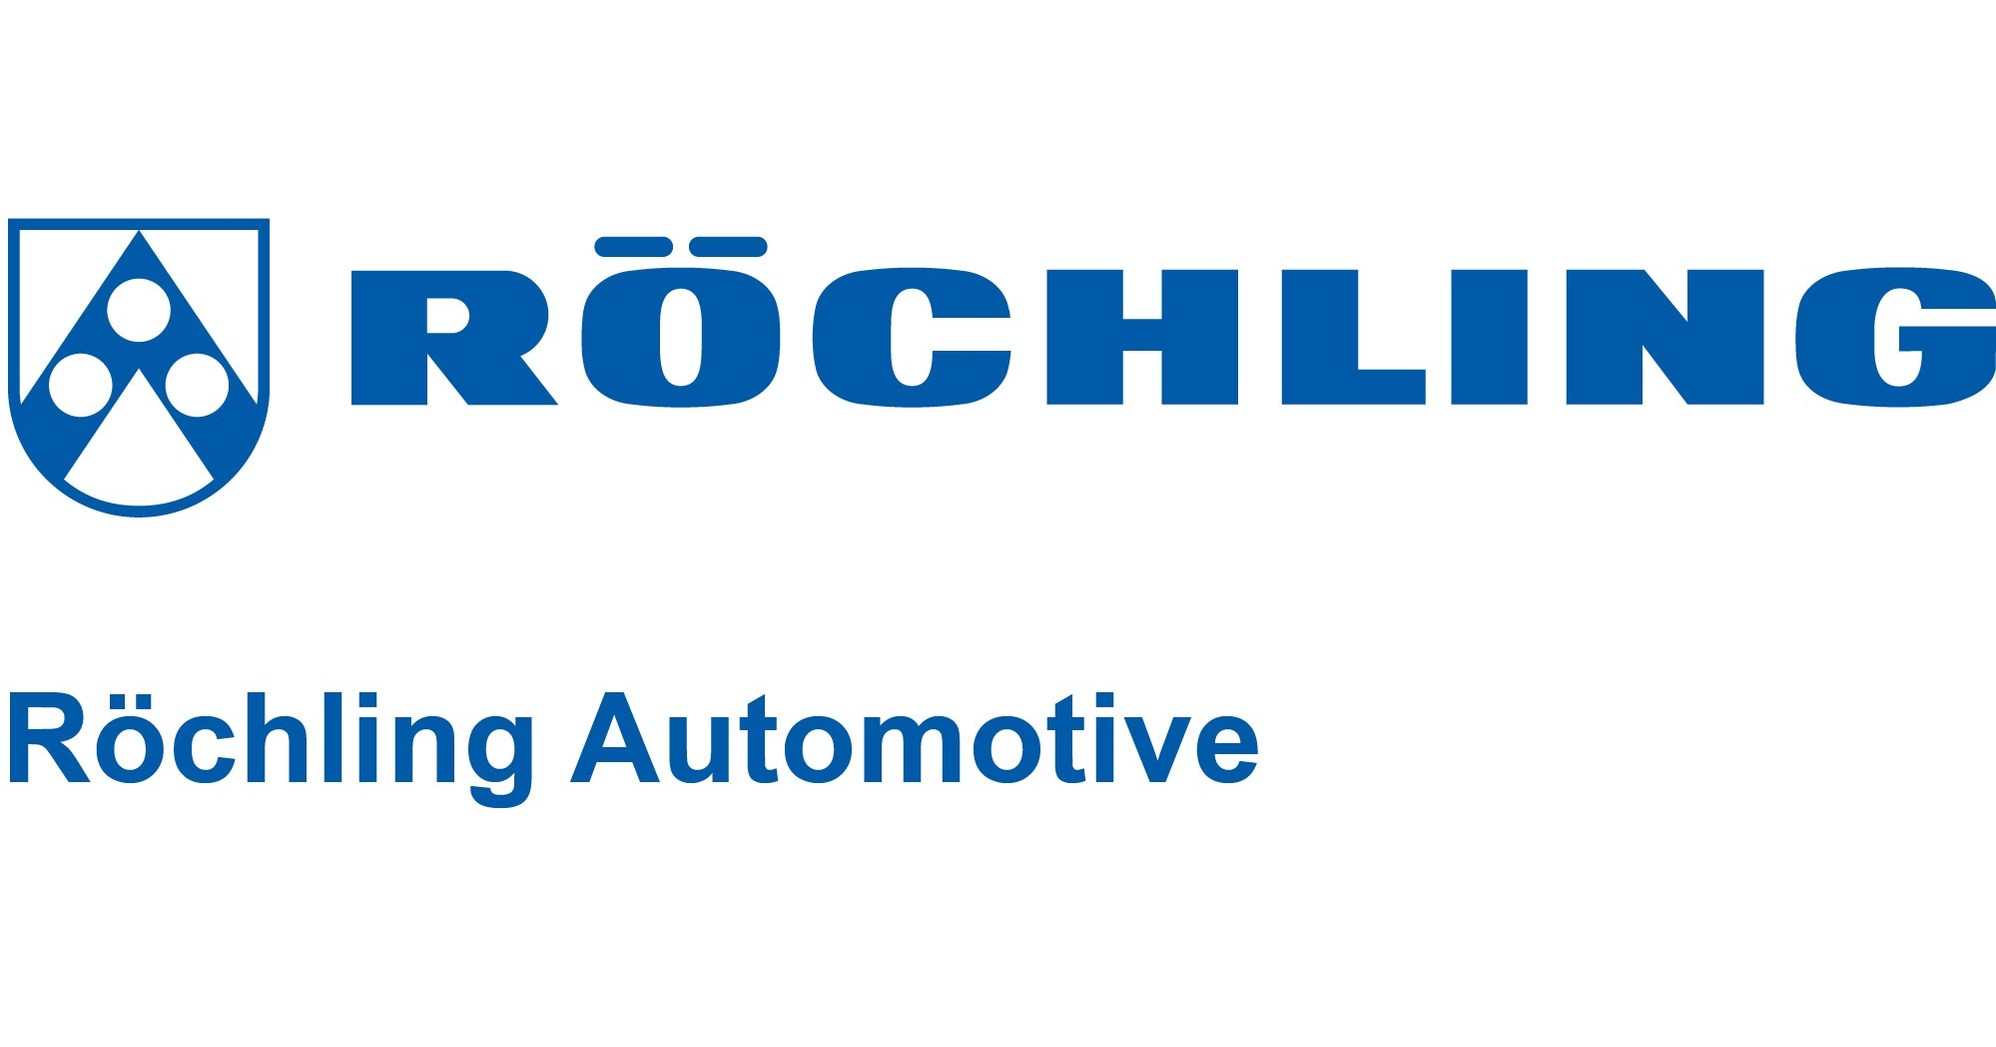 Michael Brosseau named president of Röchling Automotive USA